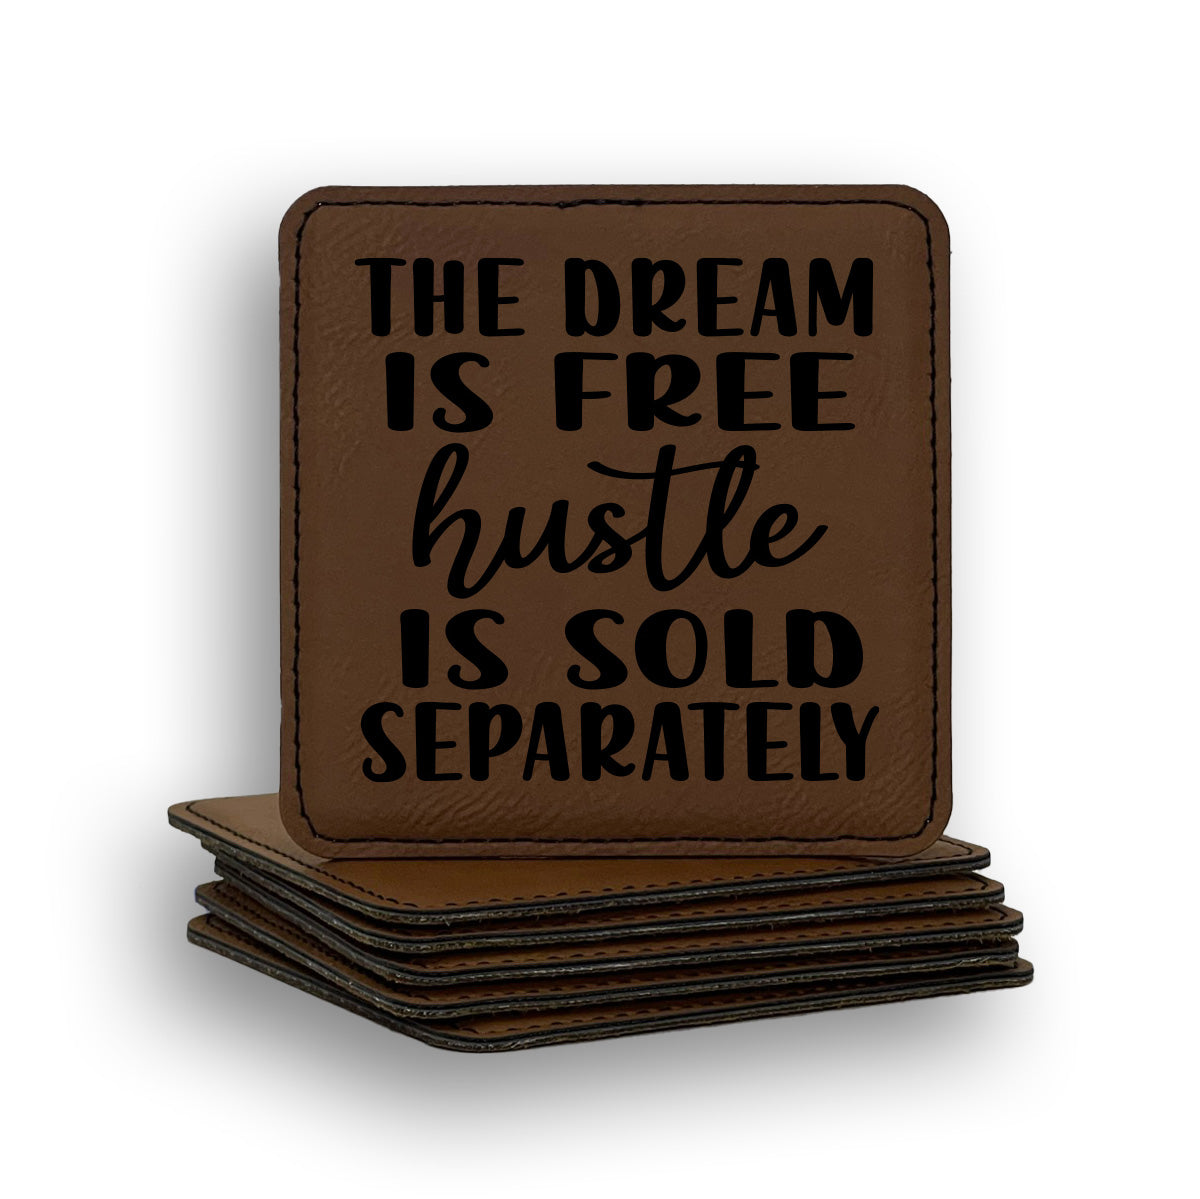 Dream Free Hustle Coaster